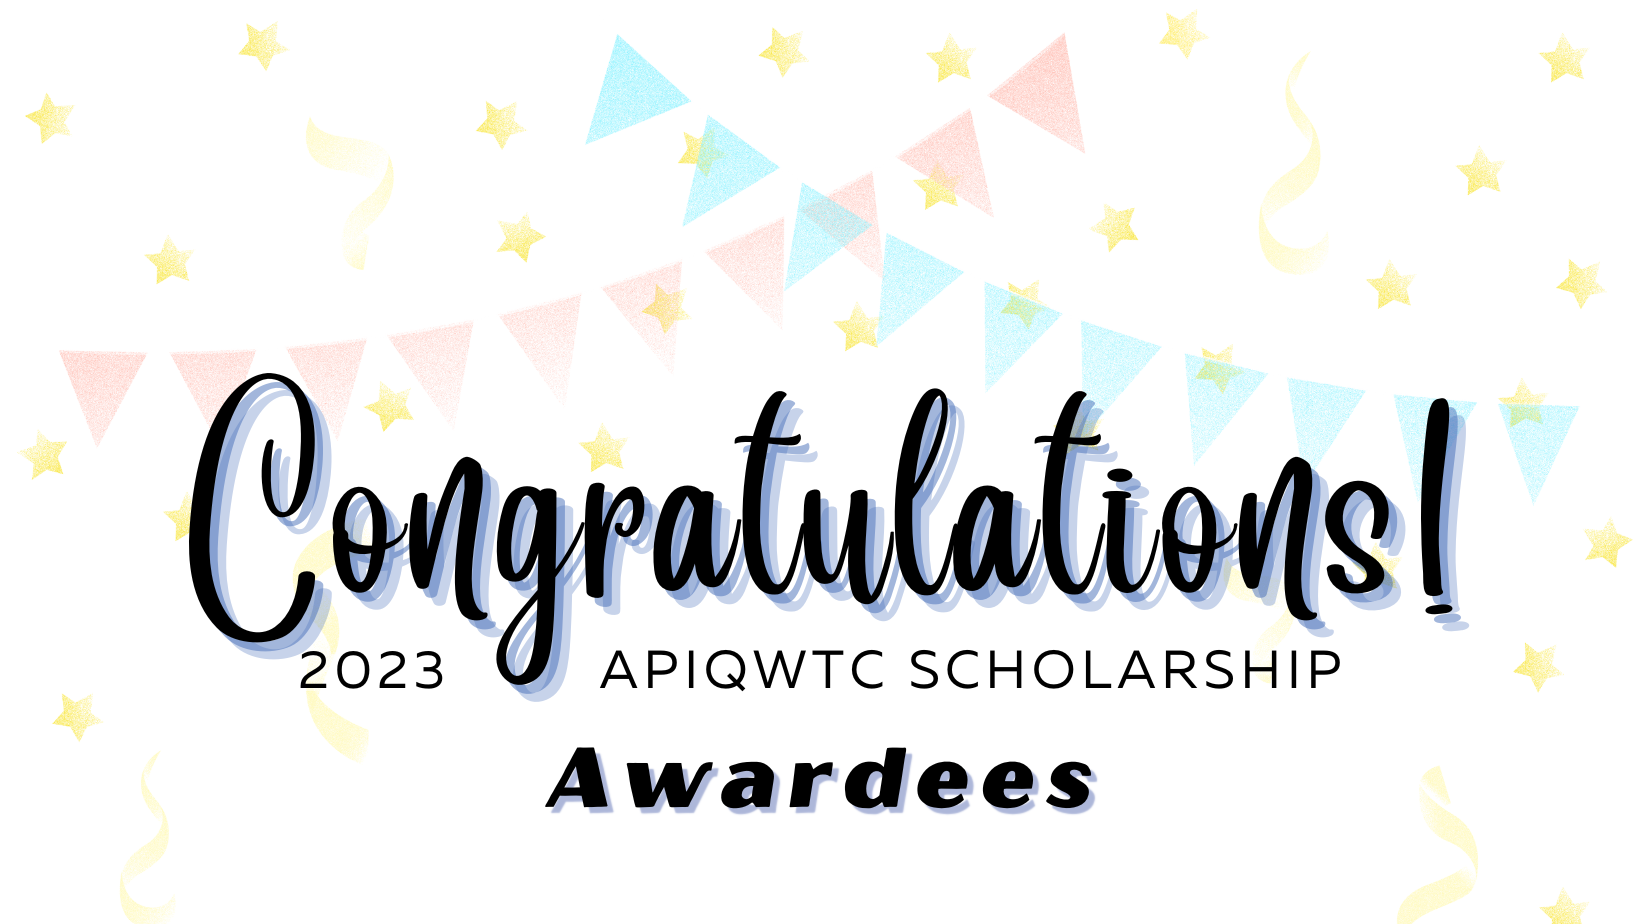 Image description: Congratulations, 2022 APIQWTC scholarship adwardees